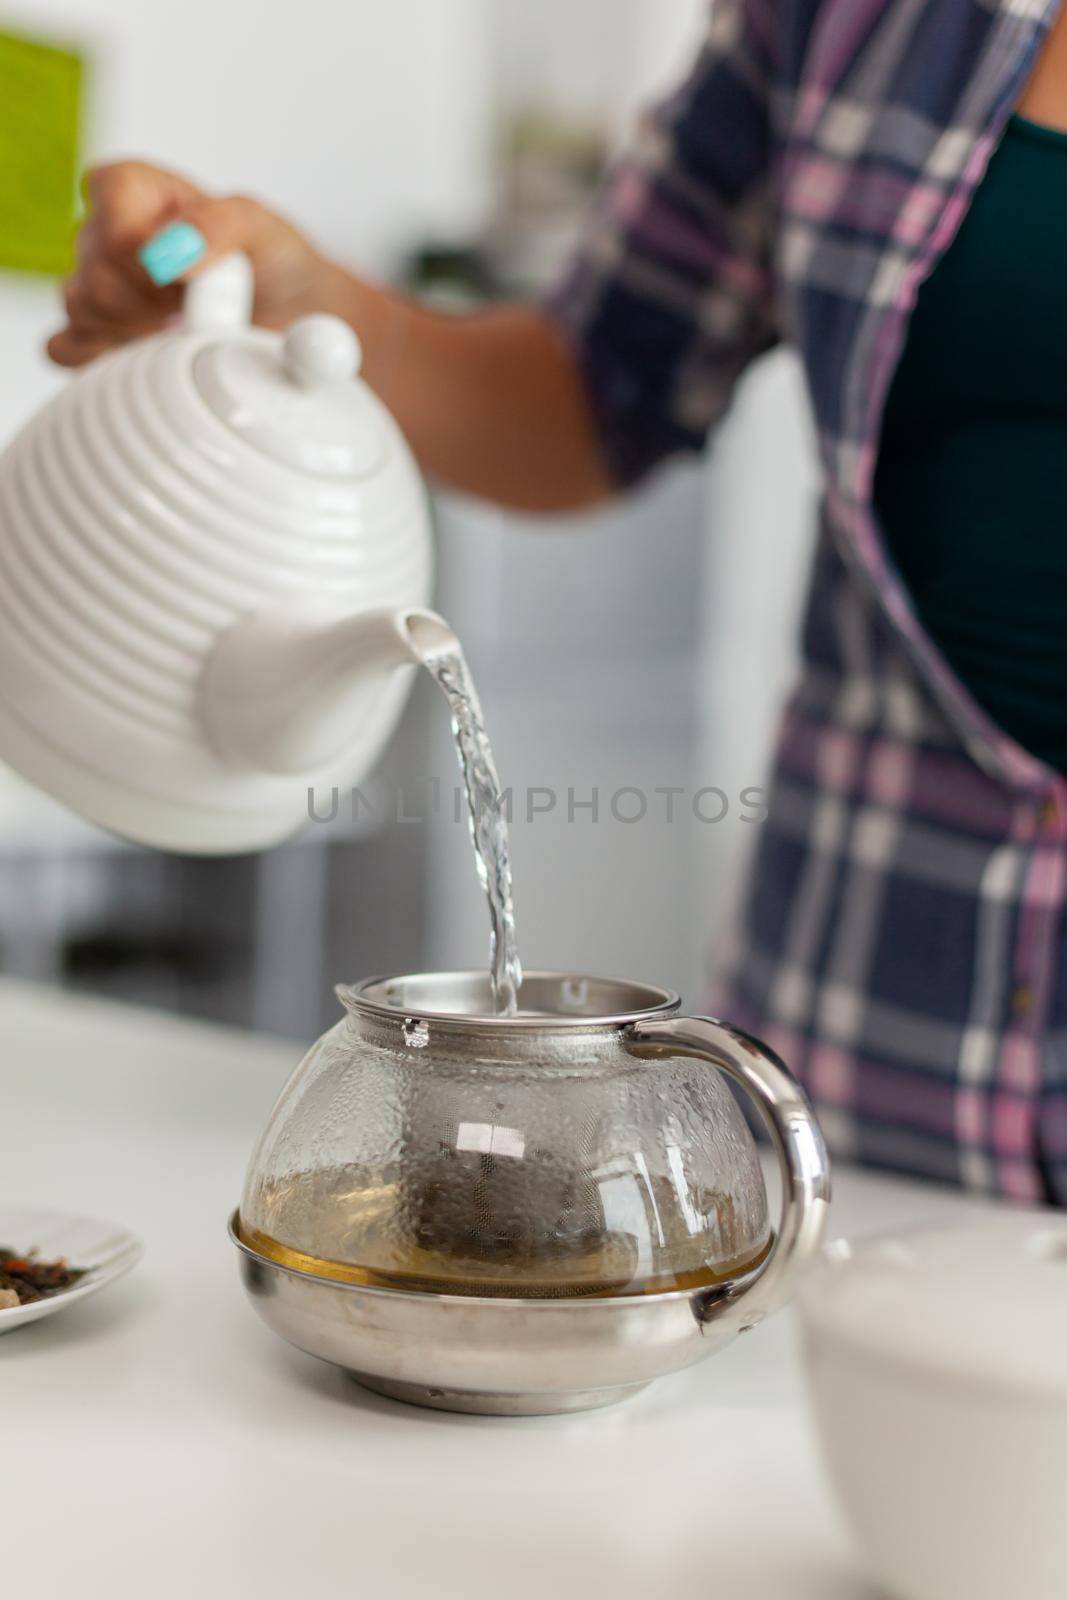 Lady making hot tea using natural herbs to enjoying breakfast in kitchen. Woman, lifestylem, beverage, preparation, herbal, teapot, morning, aromatic.